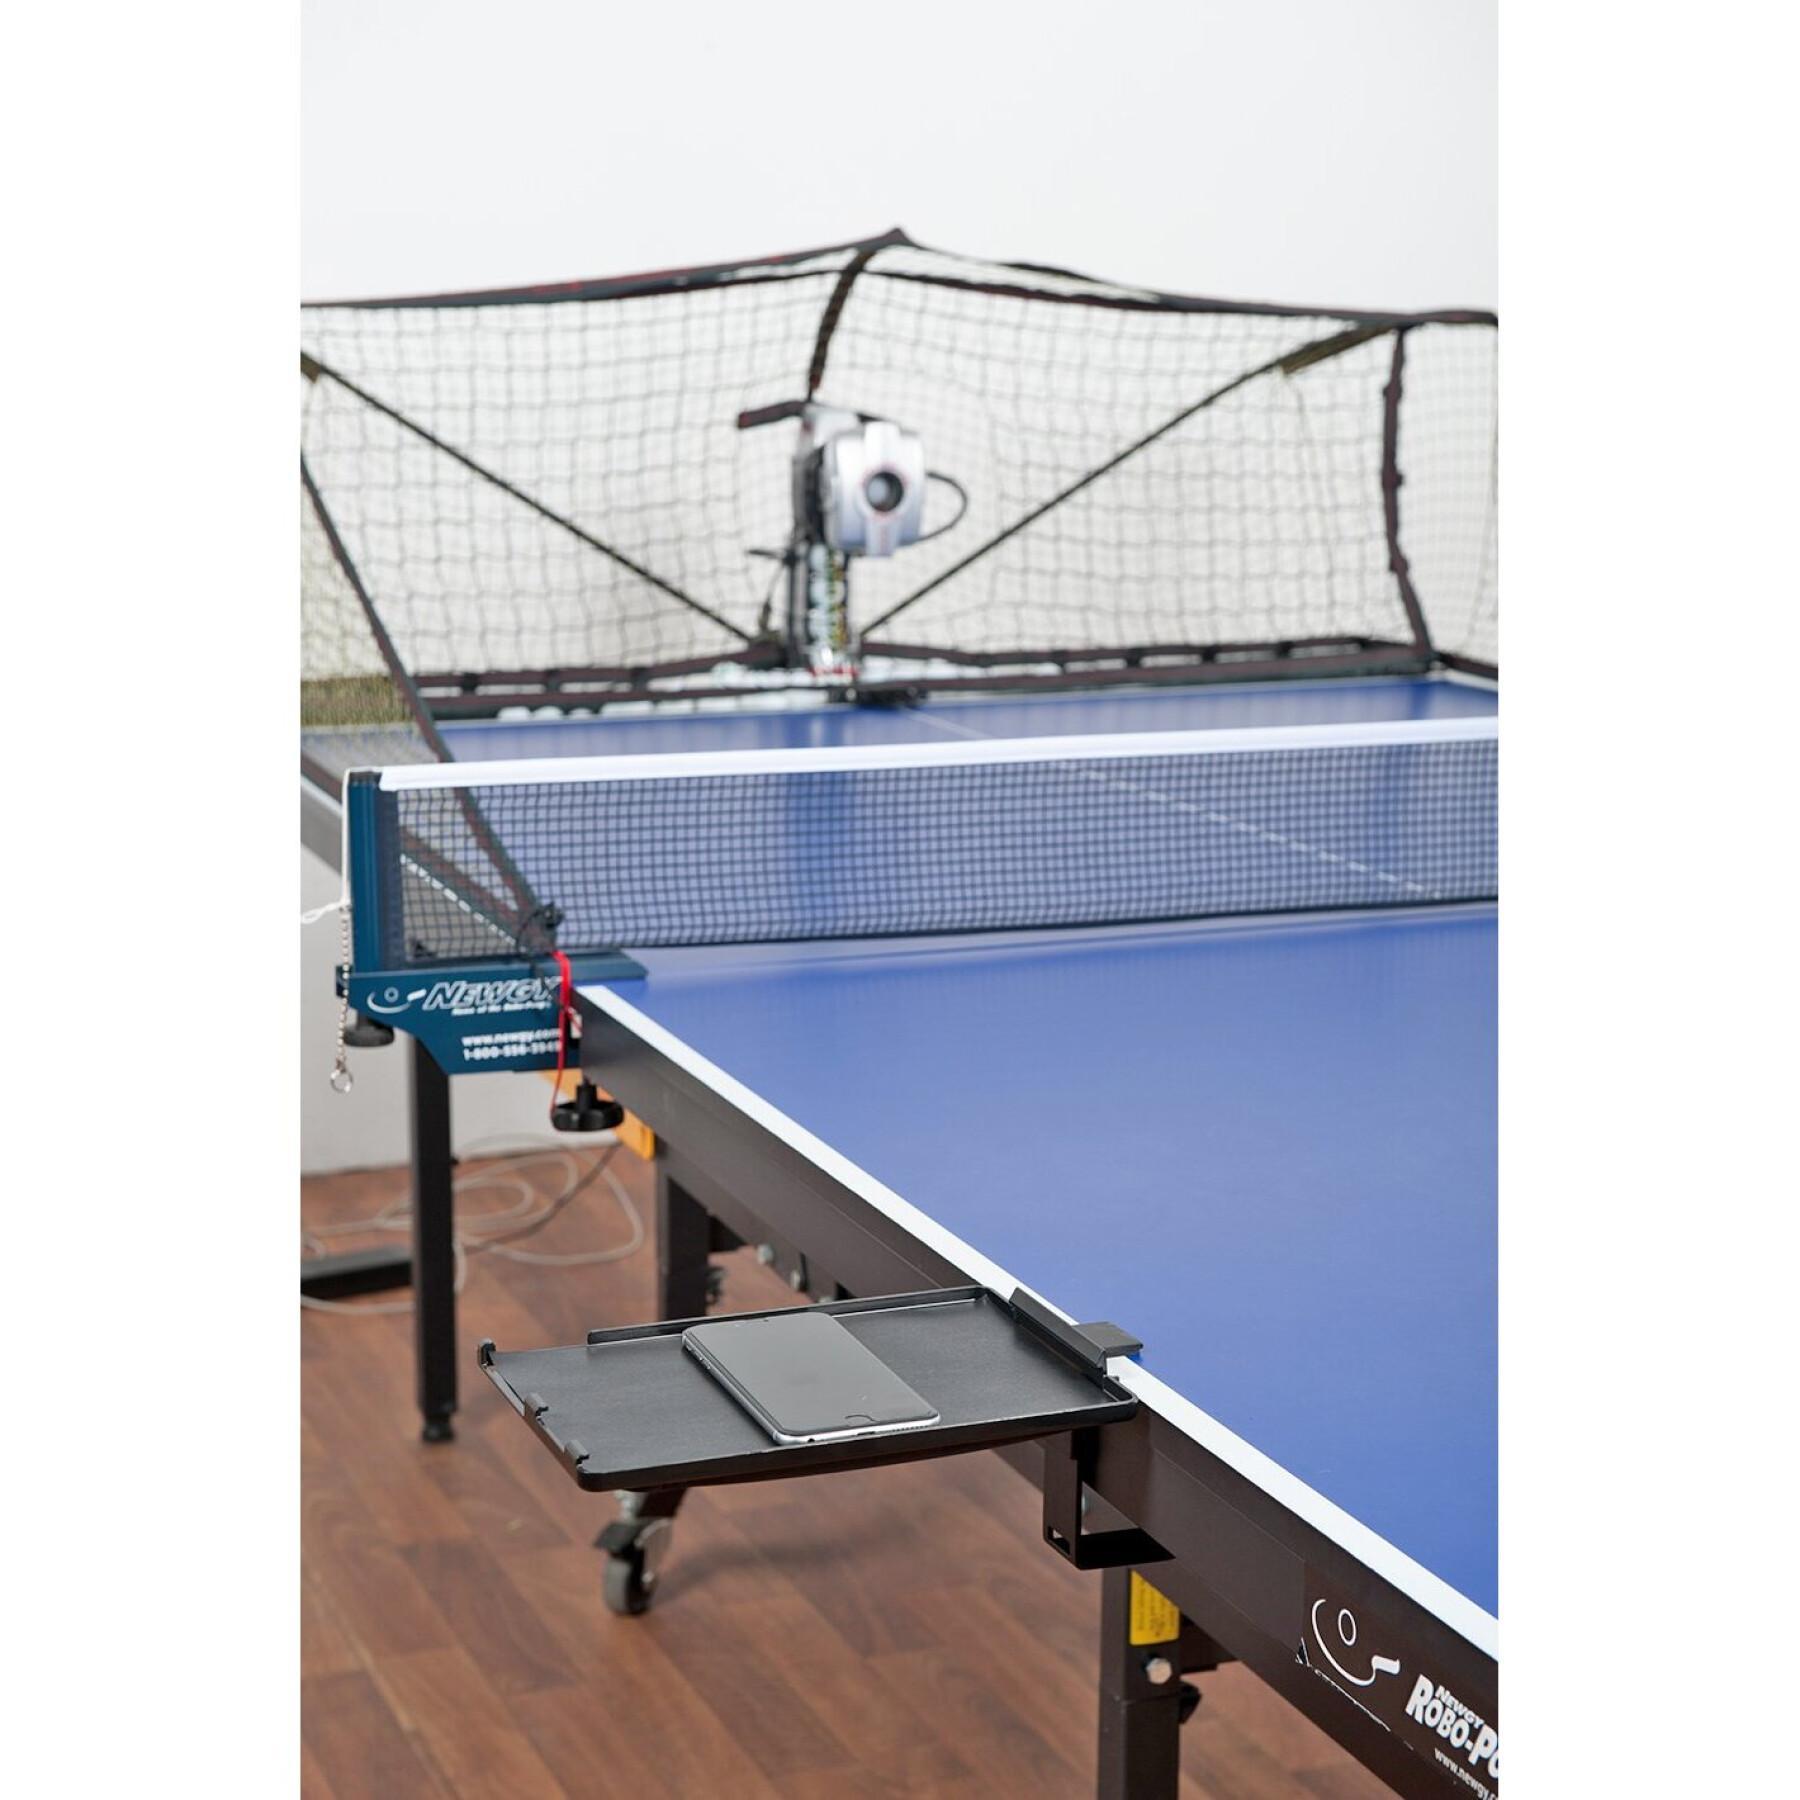 Lançador de bolas de ténis de mesa Donic Robo-Pong 3050XL